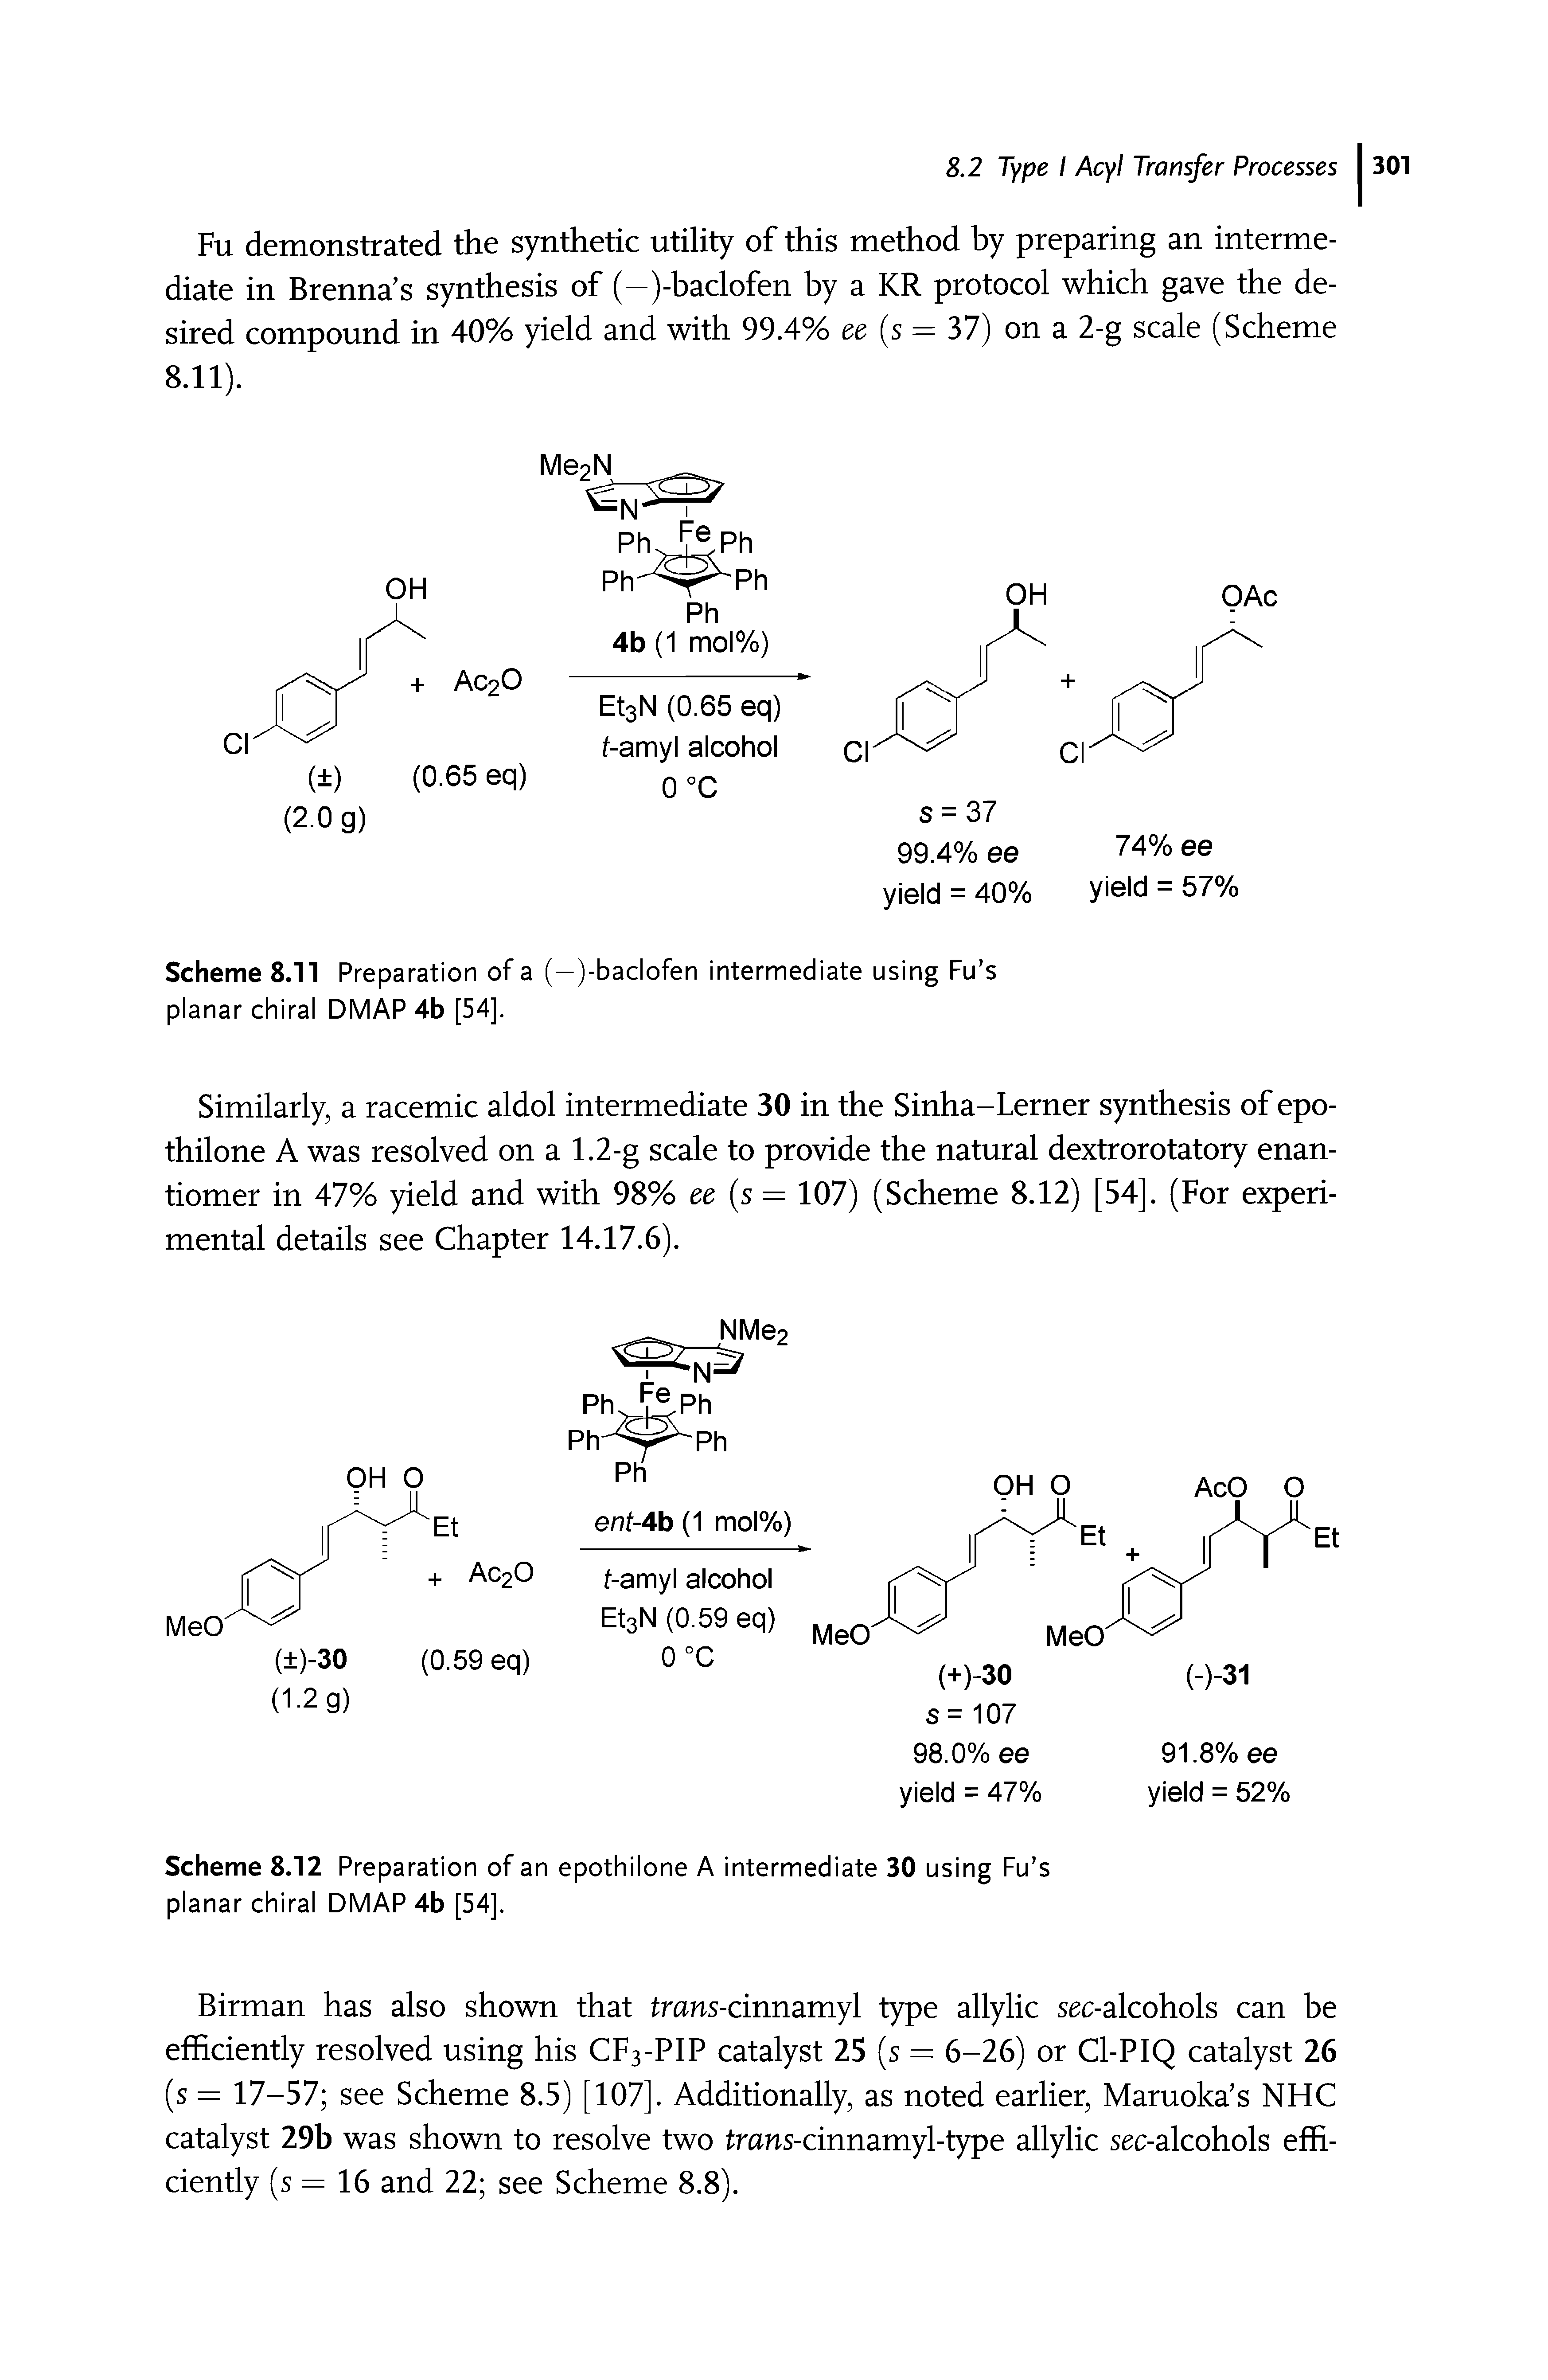 Scheme 8.11 Preparation of a (—)-baclofen intermediate using Fu s planar chiral DMAP 4b [54].